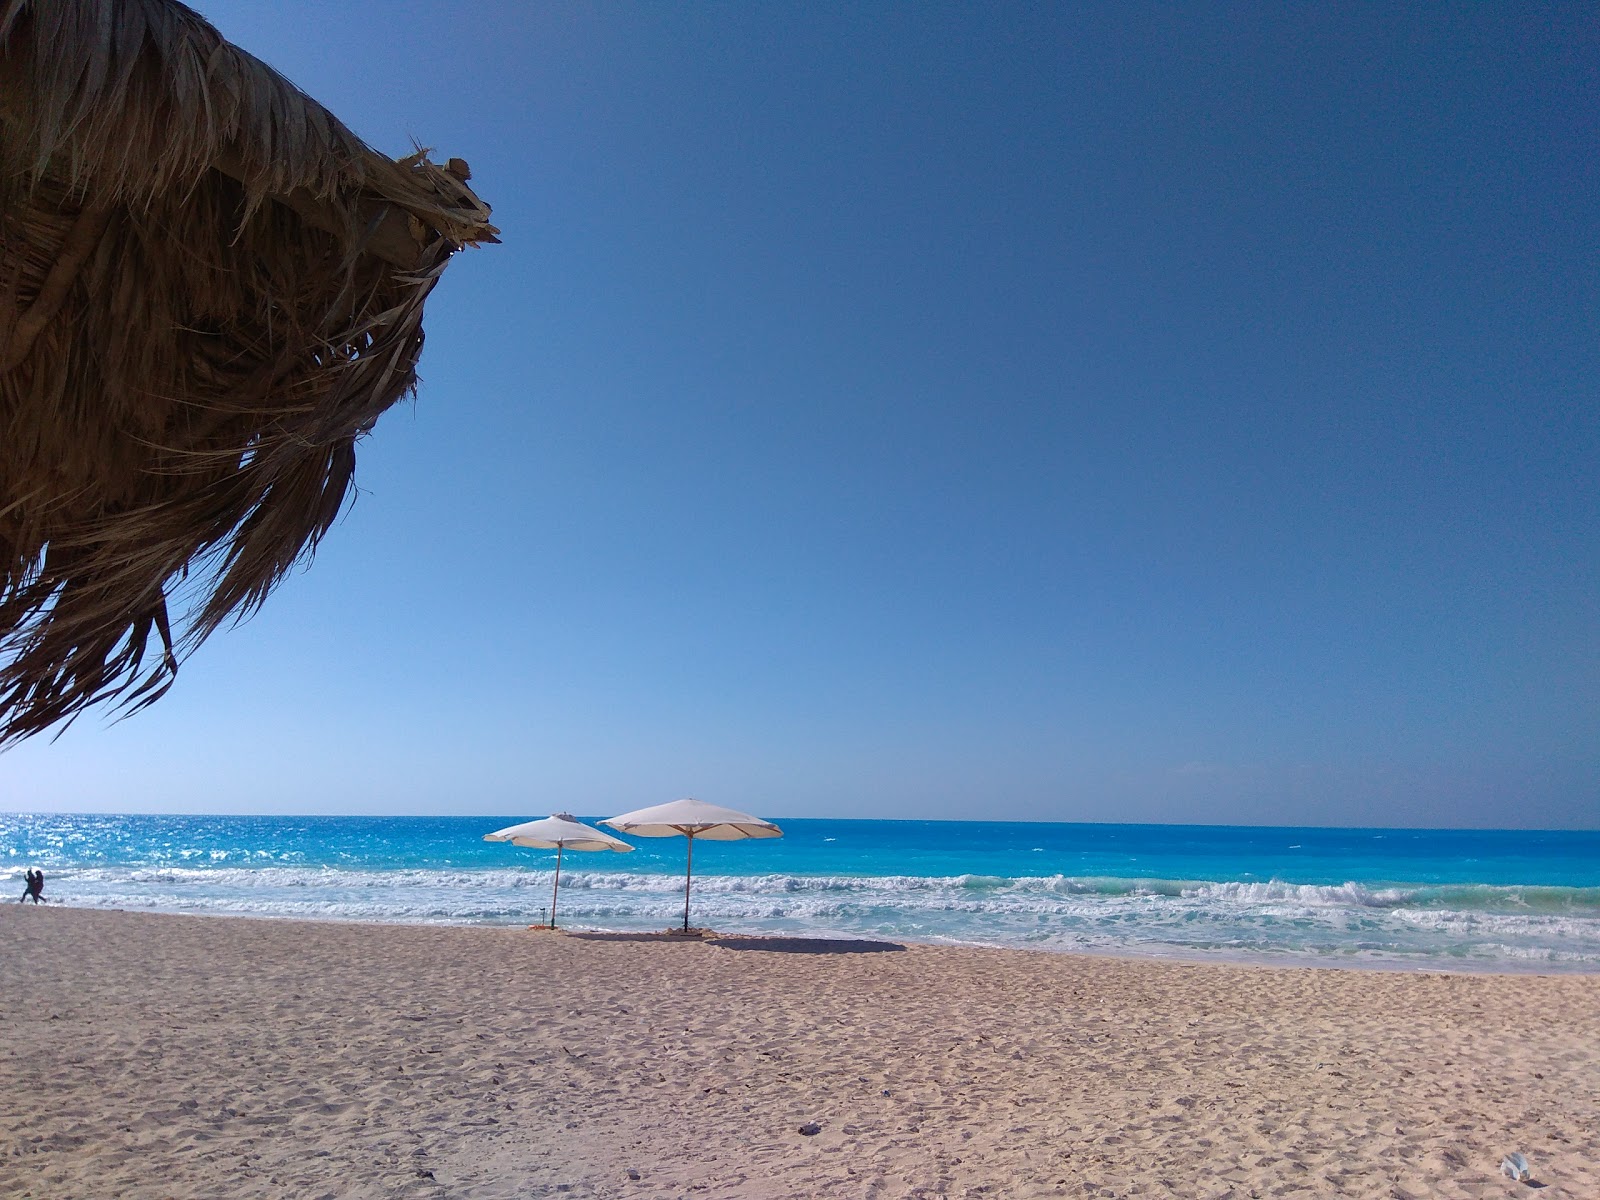 Foto de Horus Beach - lugar popular entre os apreciadores de relaxamento